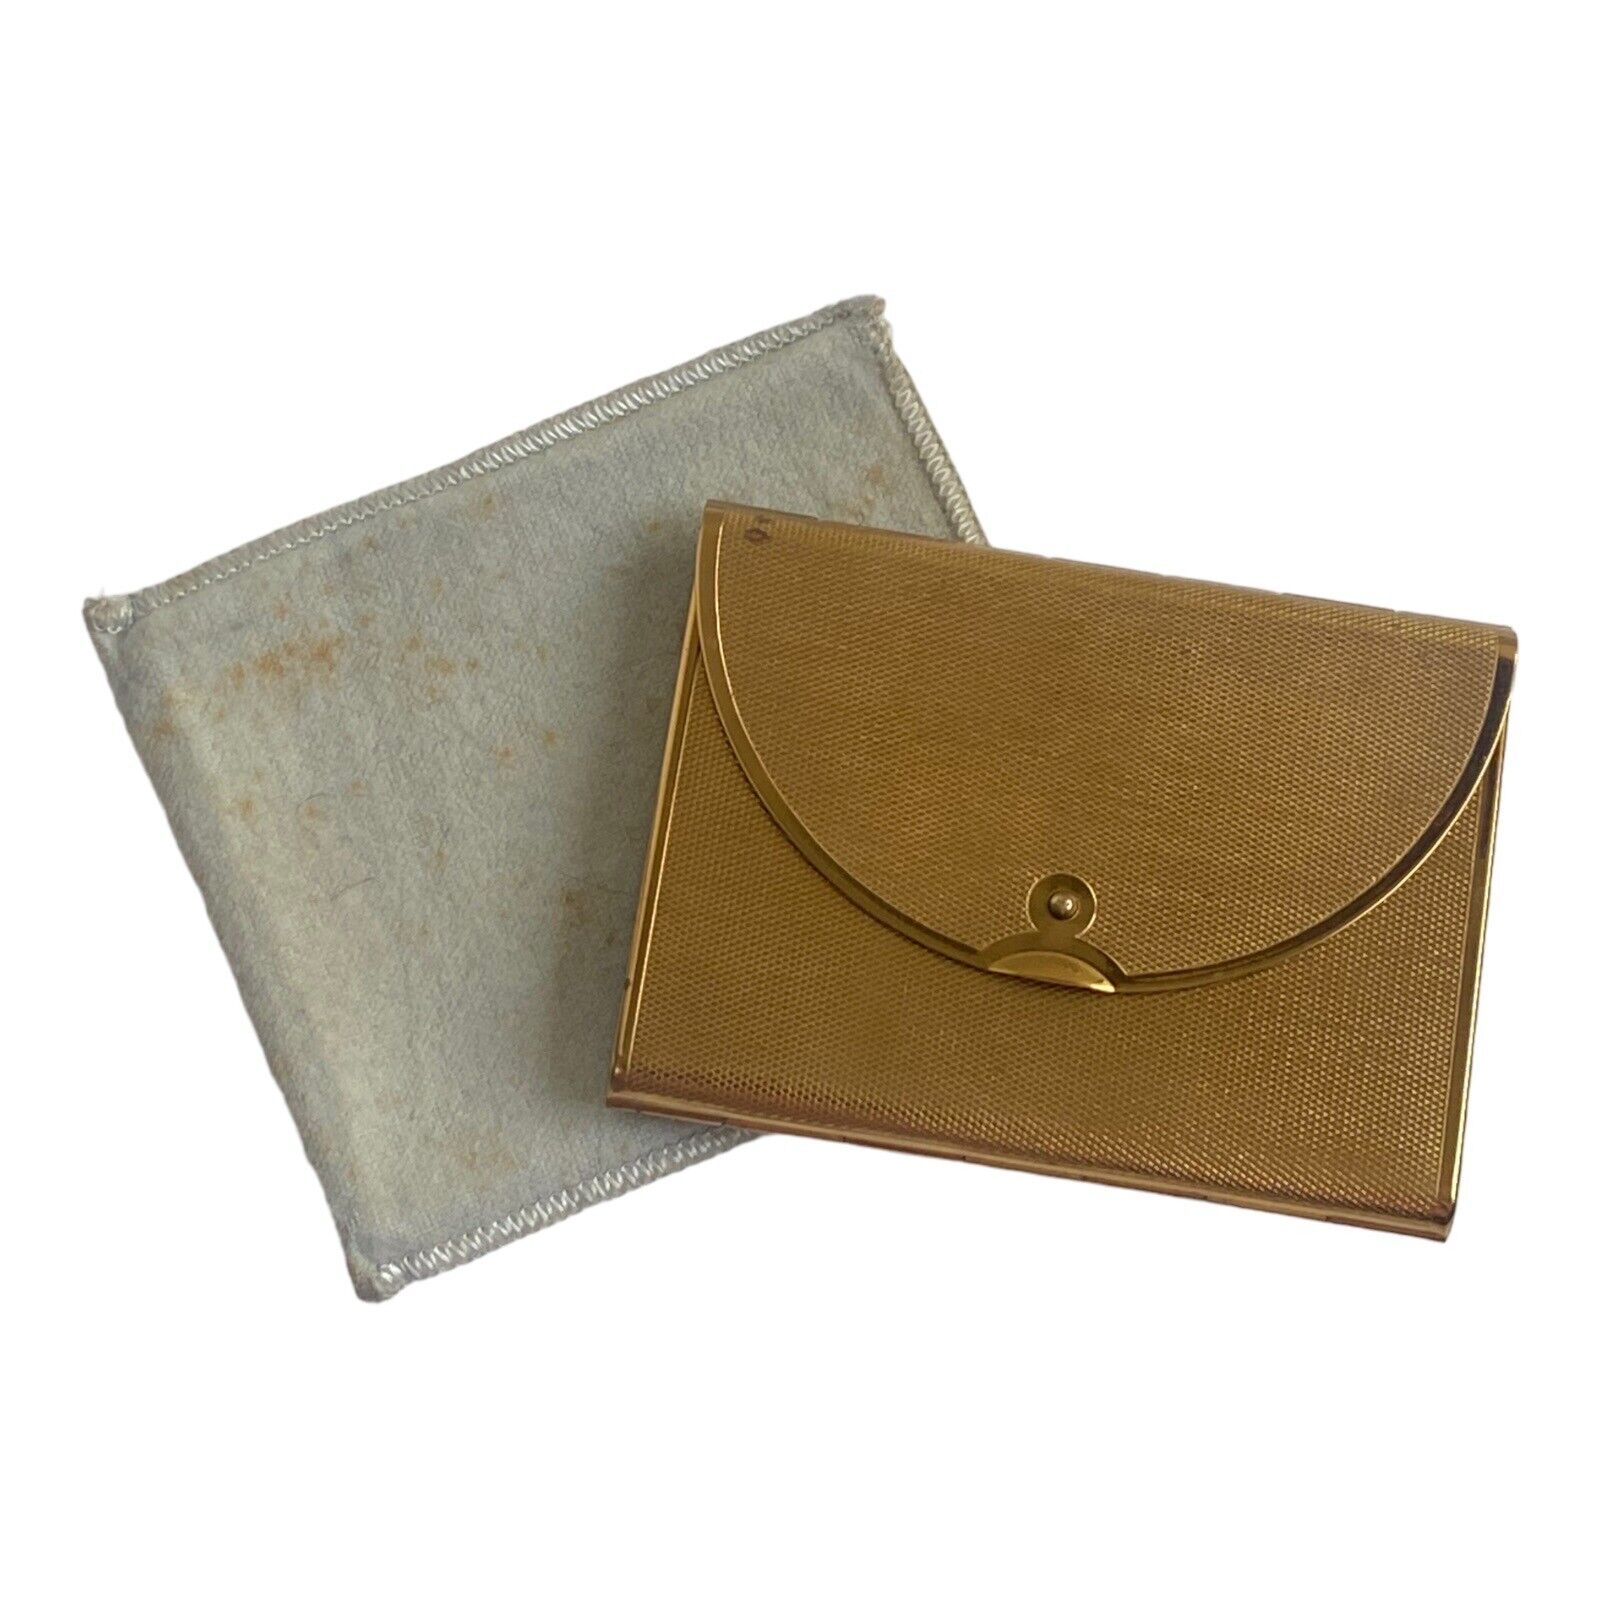 VTG 1950s Coty Tri-Fold Envelope Rectangular Gold Tone Powder Compact W/ Pouch